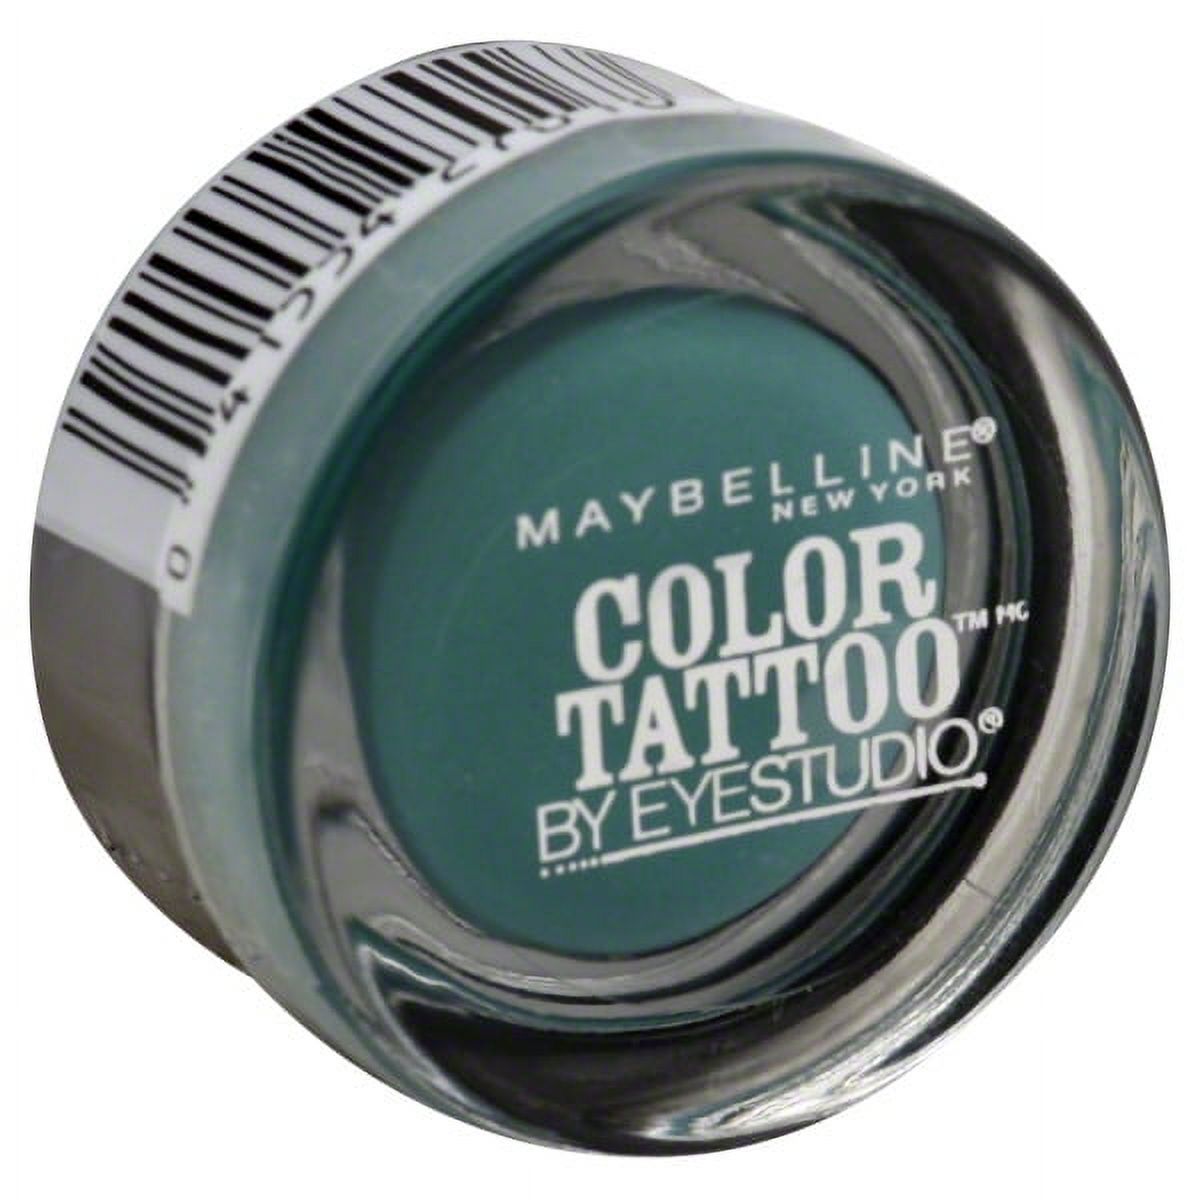 Maybelline New York Eyestudio ColorTattoo 24HR Cream Gel Eye Shadow, Edgy Emerald, 0.14 oz - image 1 of 2